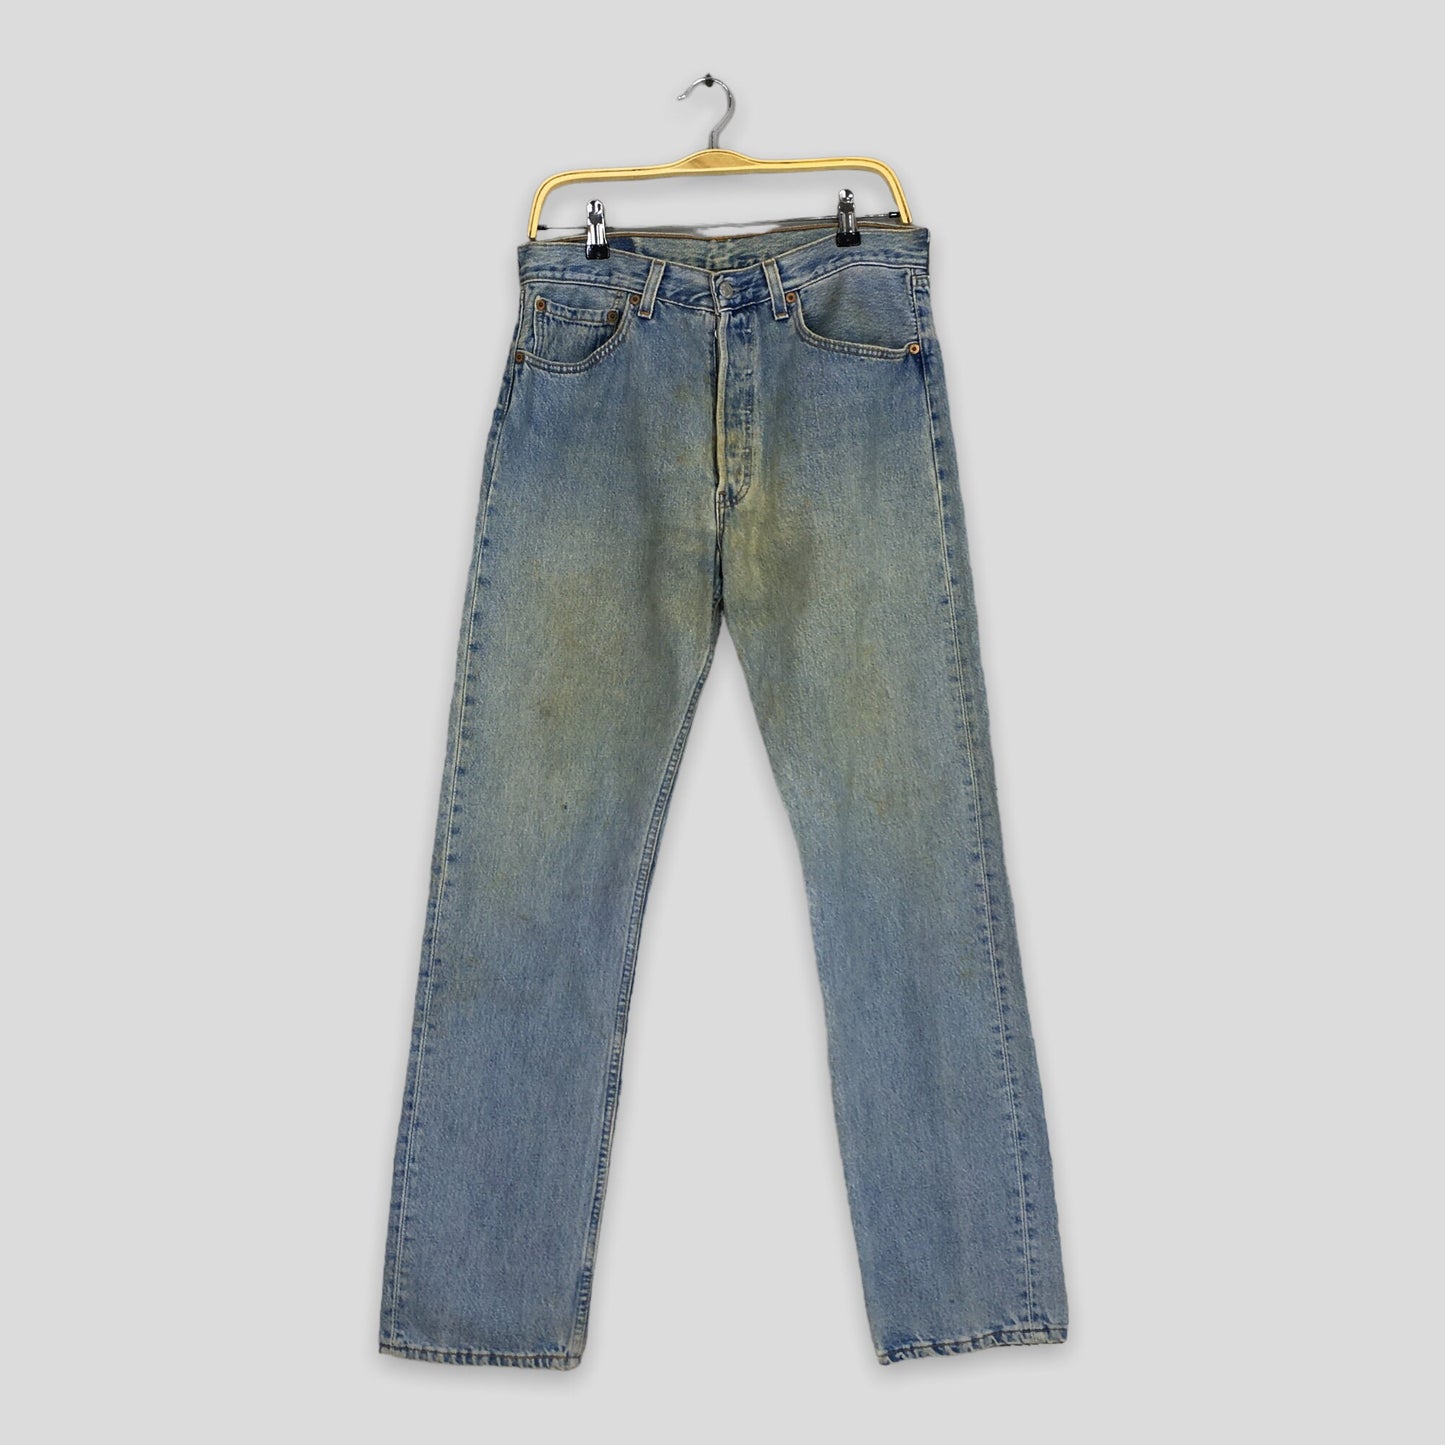 Levi's 501 Faded Dirty Jeans Stonewash Size 31x31